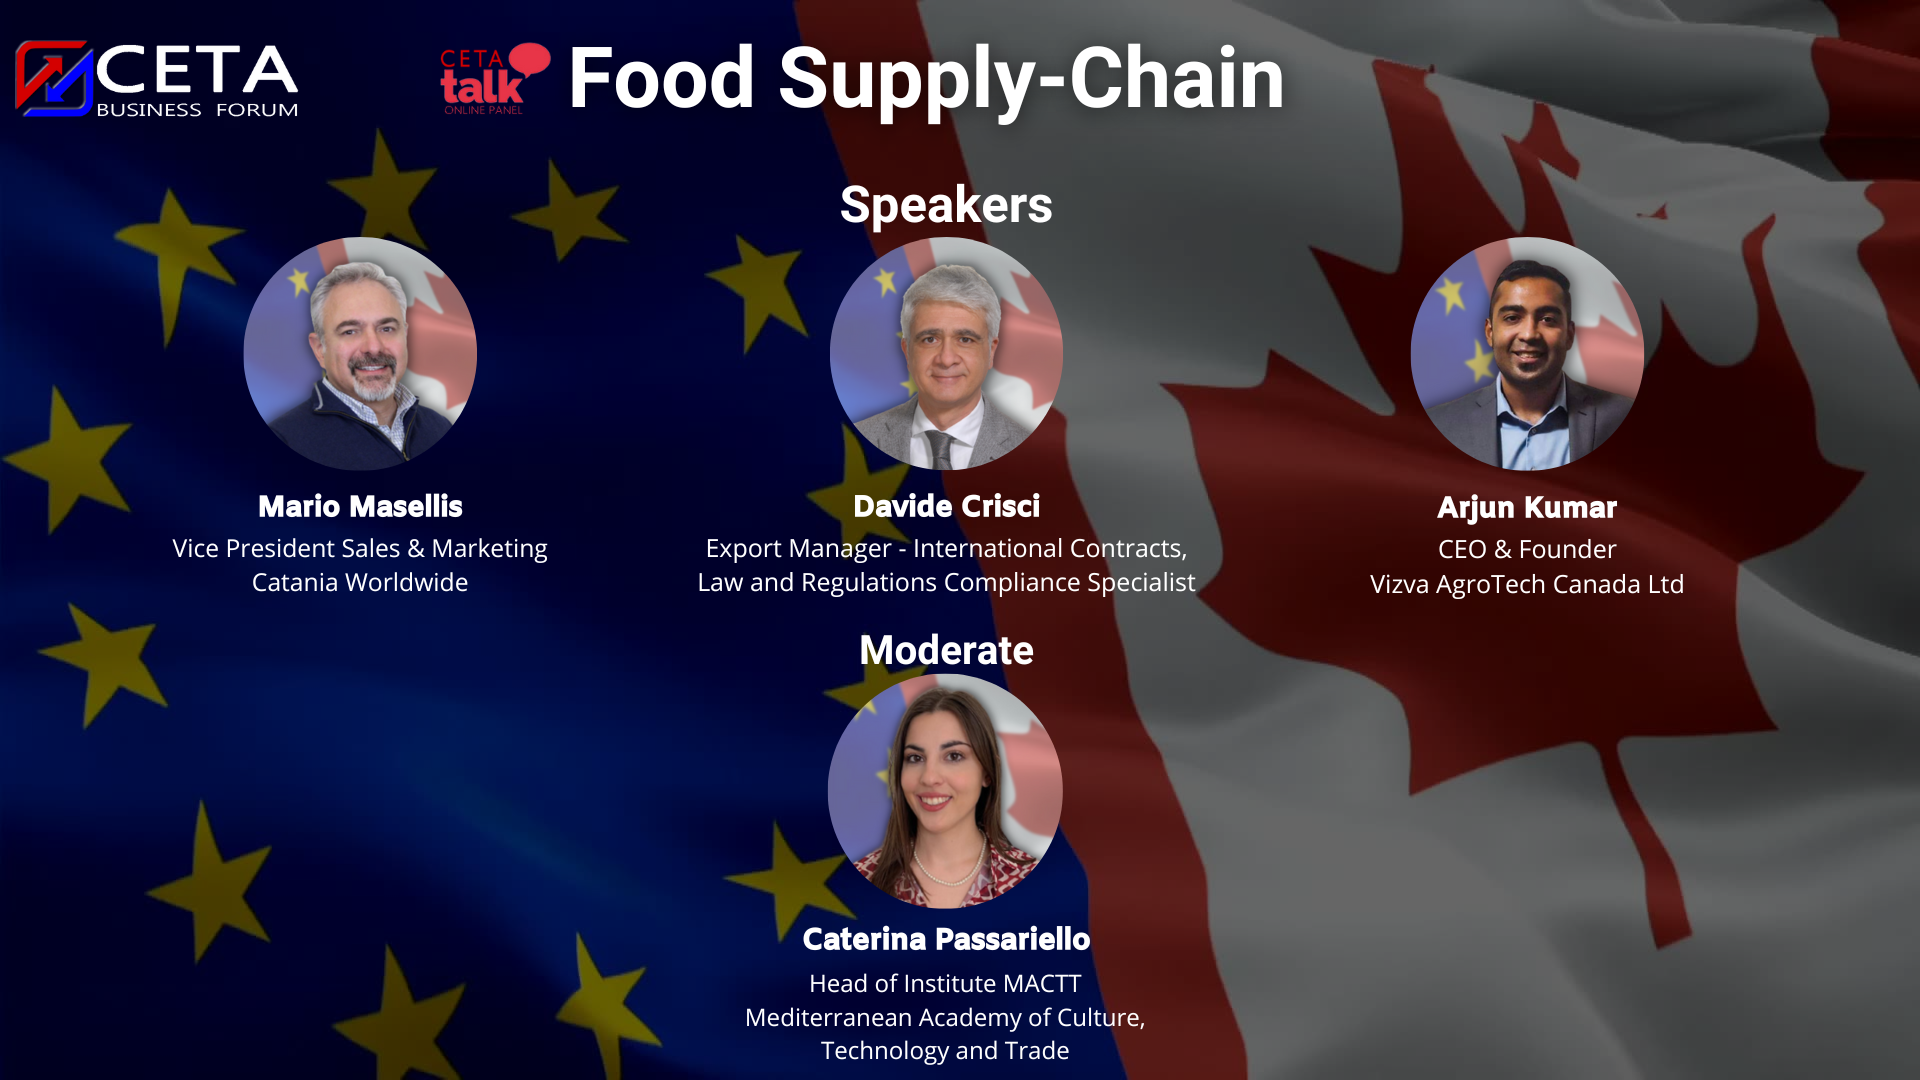 Image_Video_CETA_Talk_Food_Supply-Chain